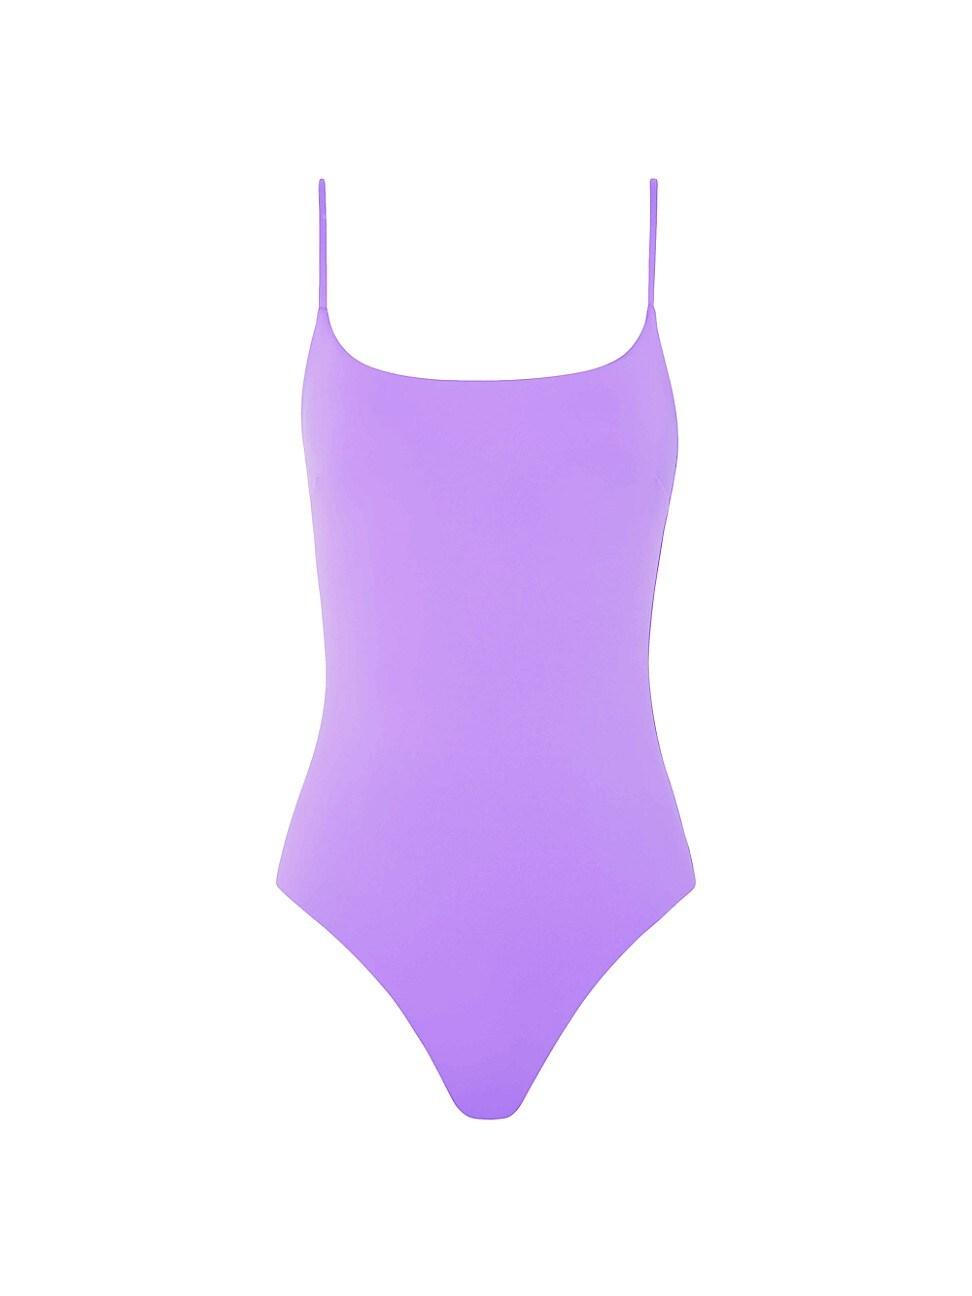 Bondi Born Lucie One-piece Swimsuit in Purple | Lyst